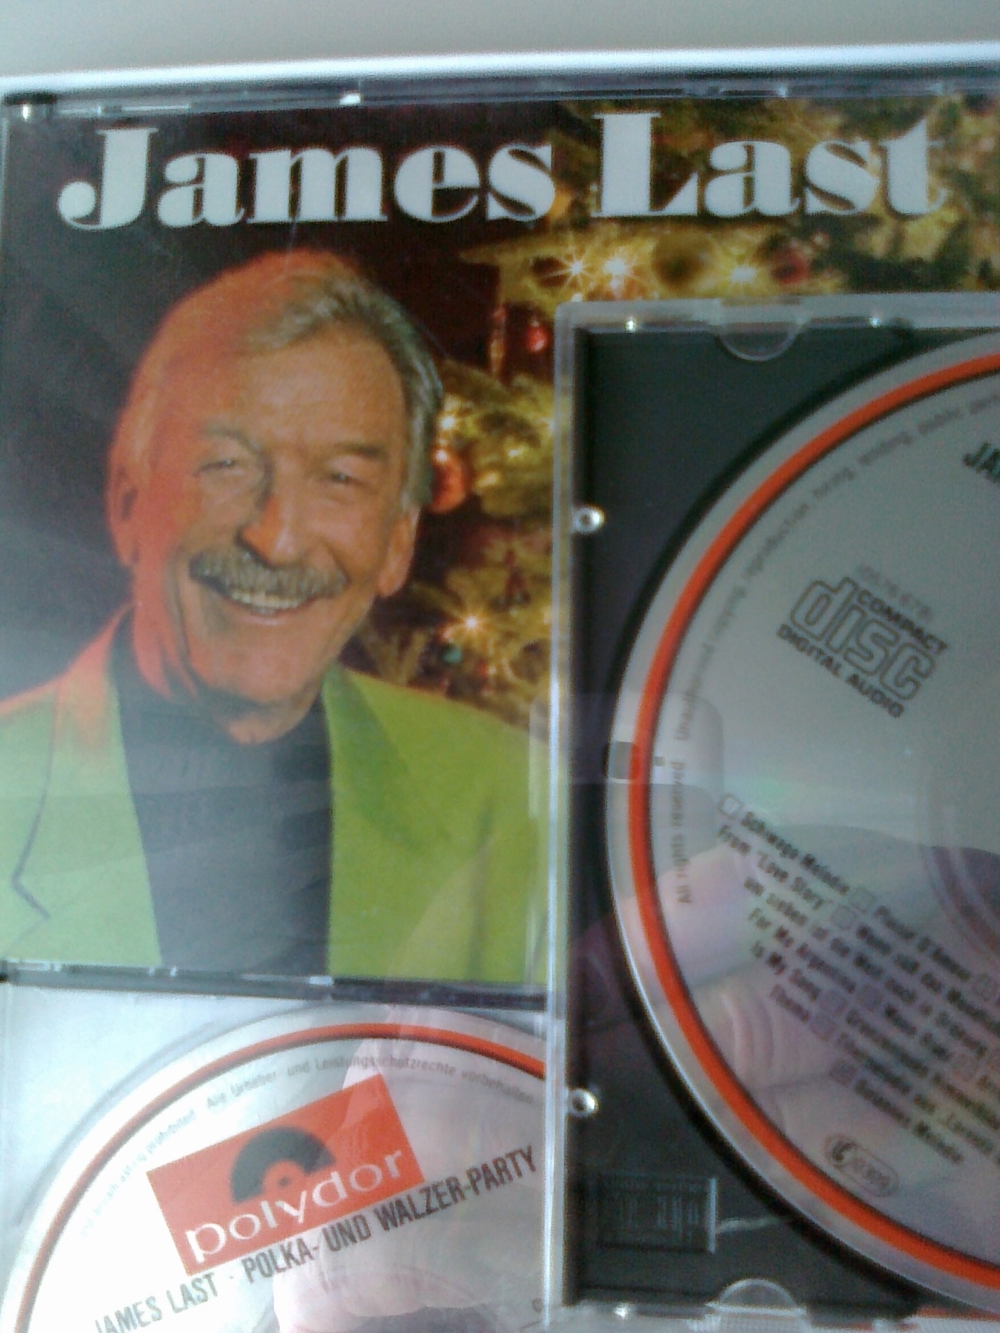 James Last - Musik   Rarität ( CD s )